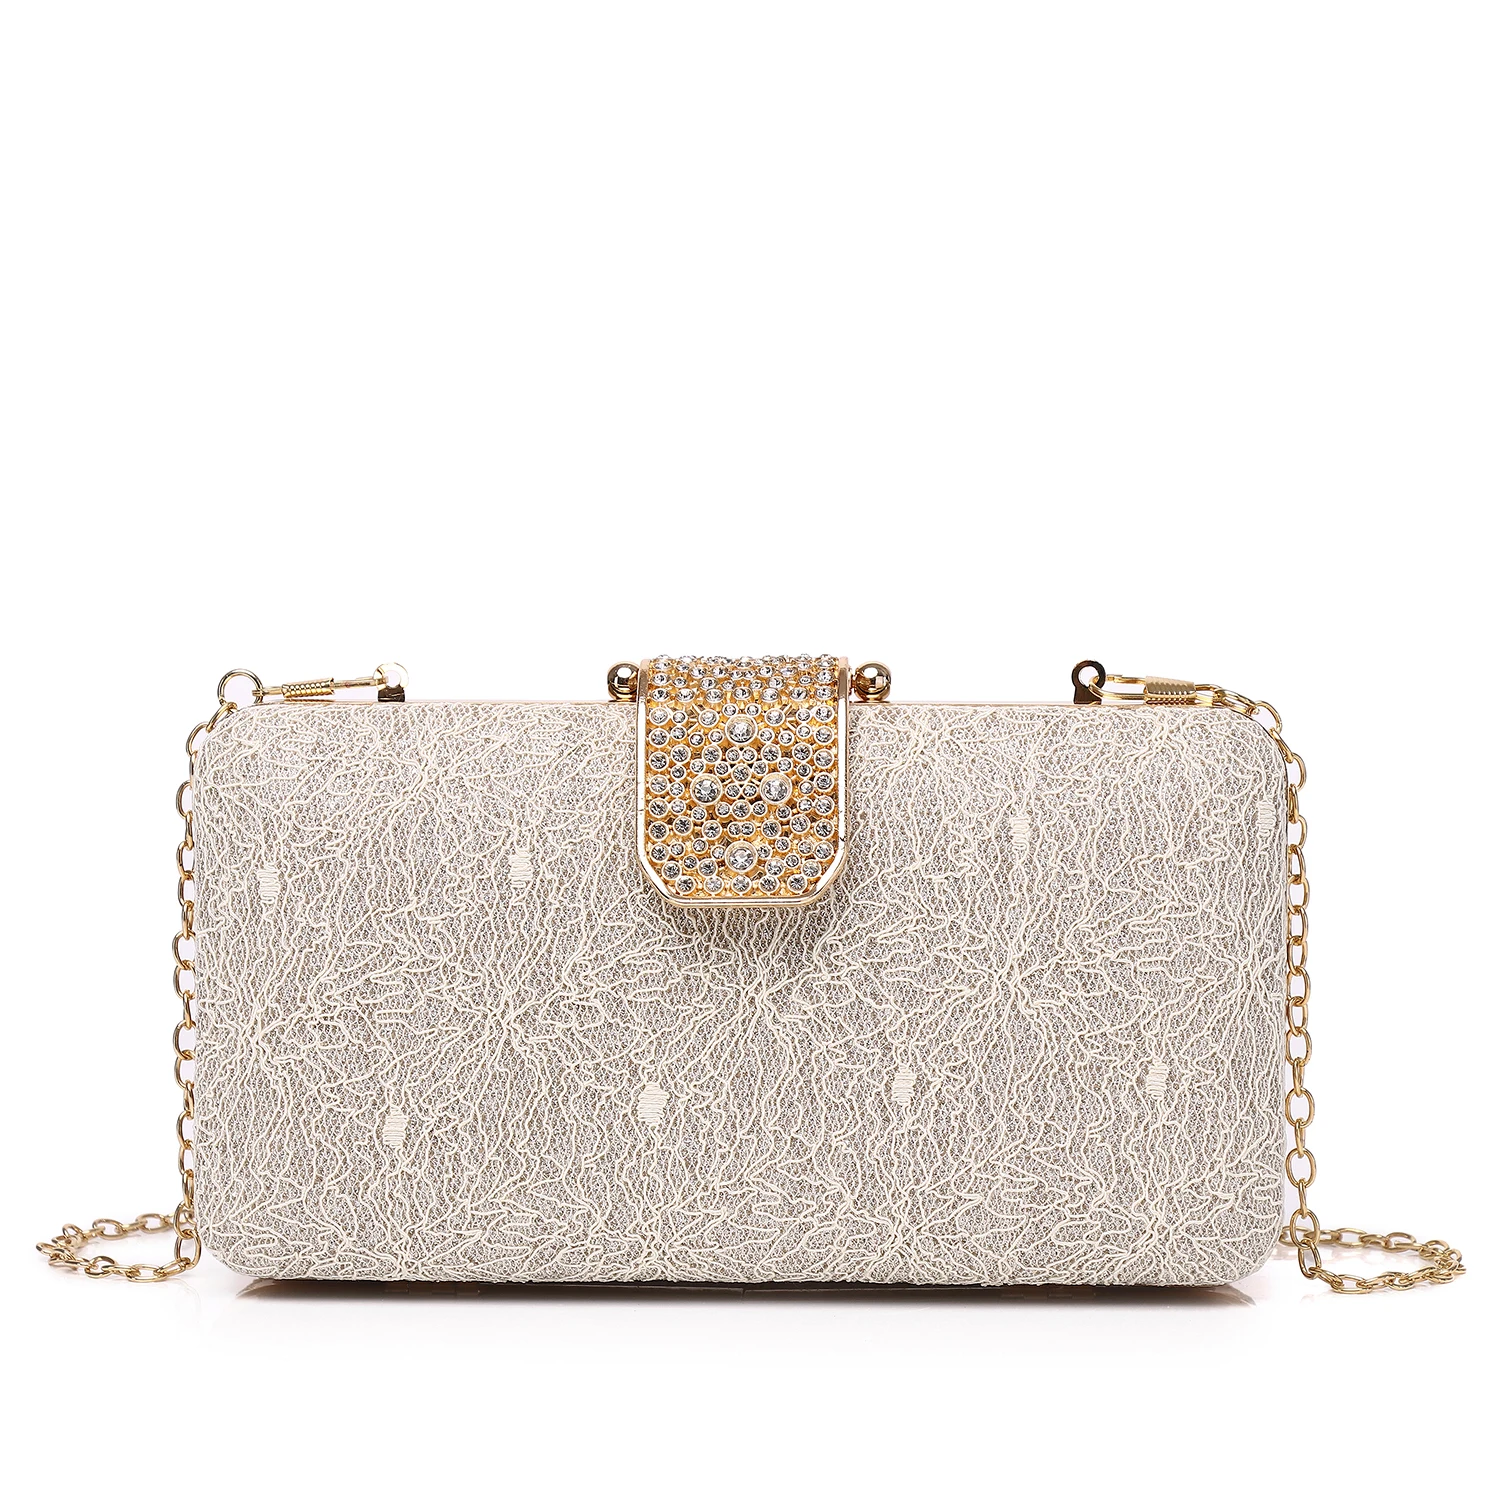 Sparkling Sequins Clutches Evening Handbags for Women Wedding Party Diam... - $67.23